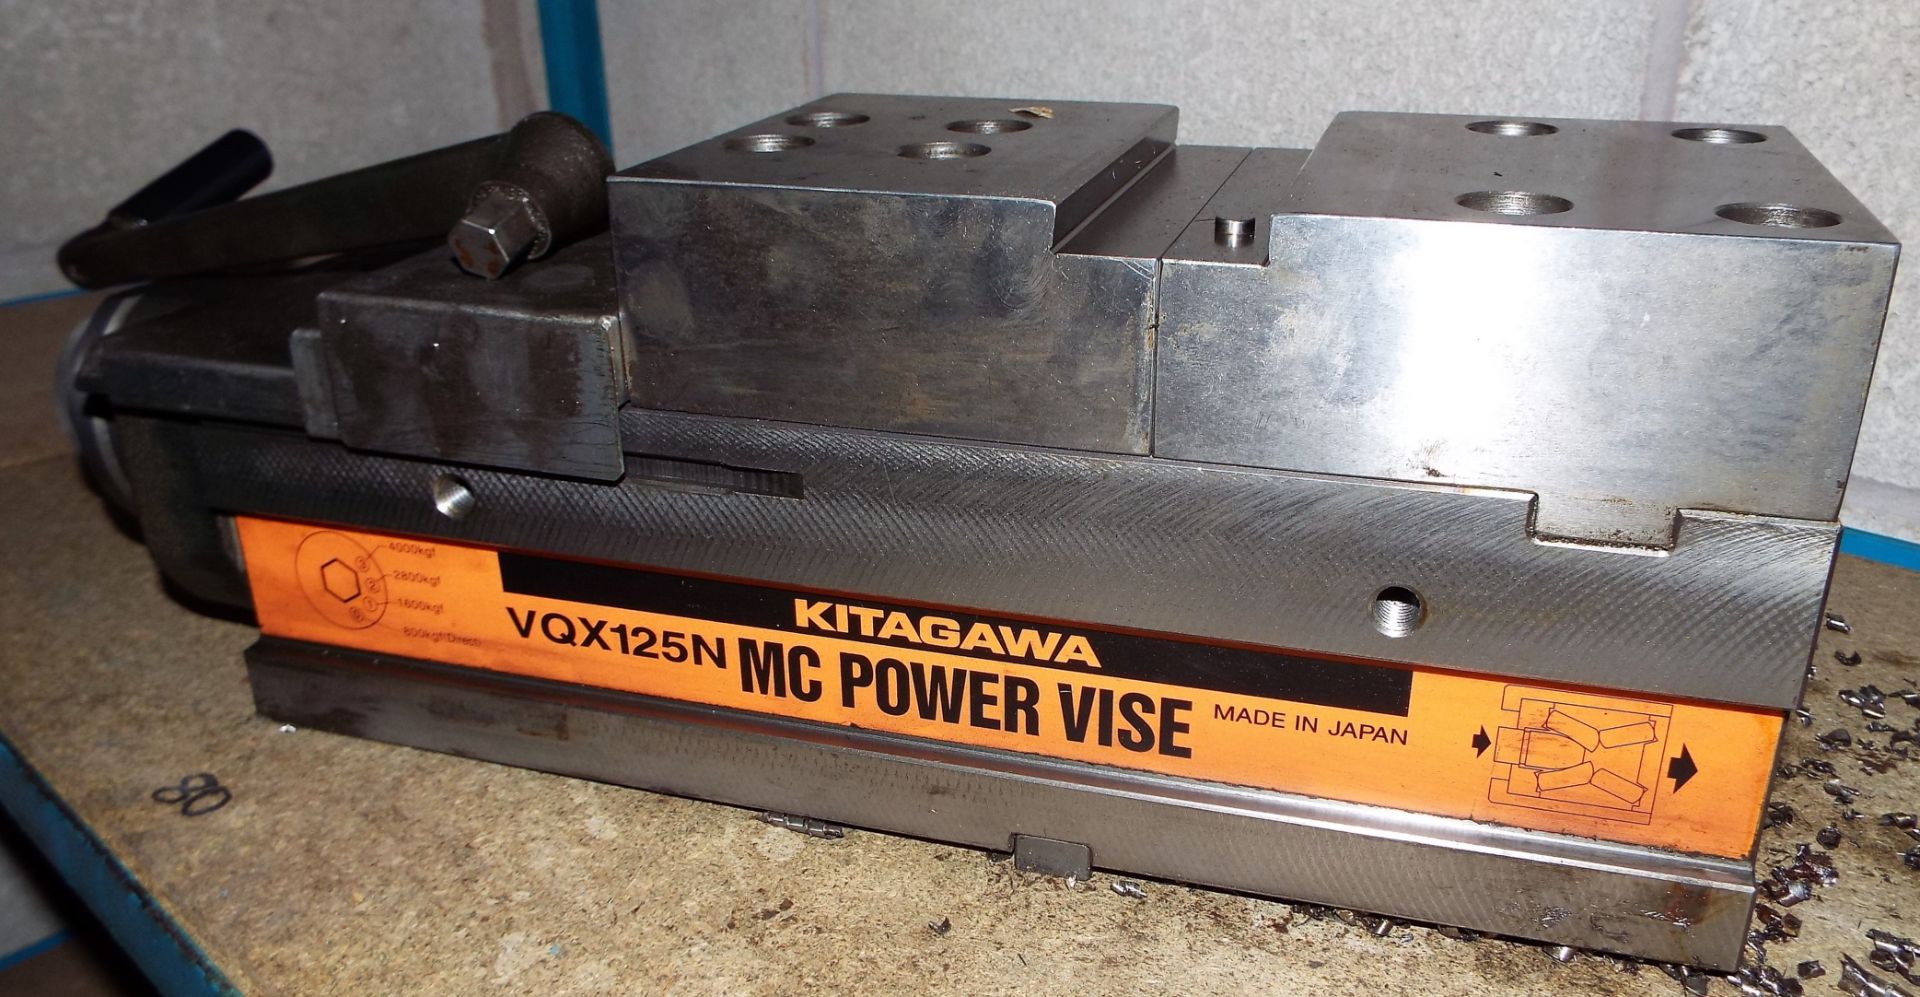 Kitigawa VQX125N MC Power Vise.